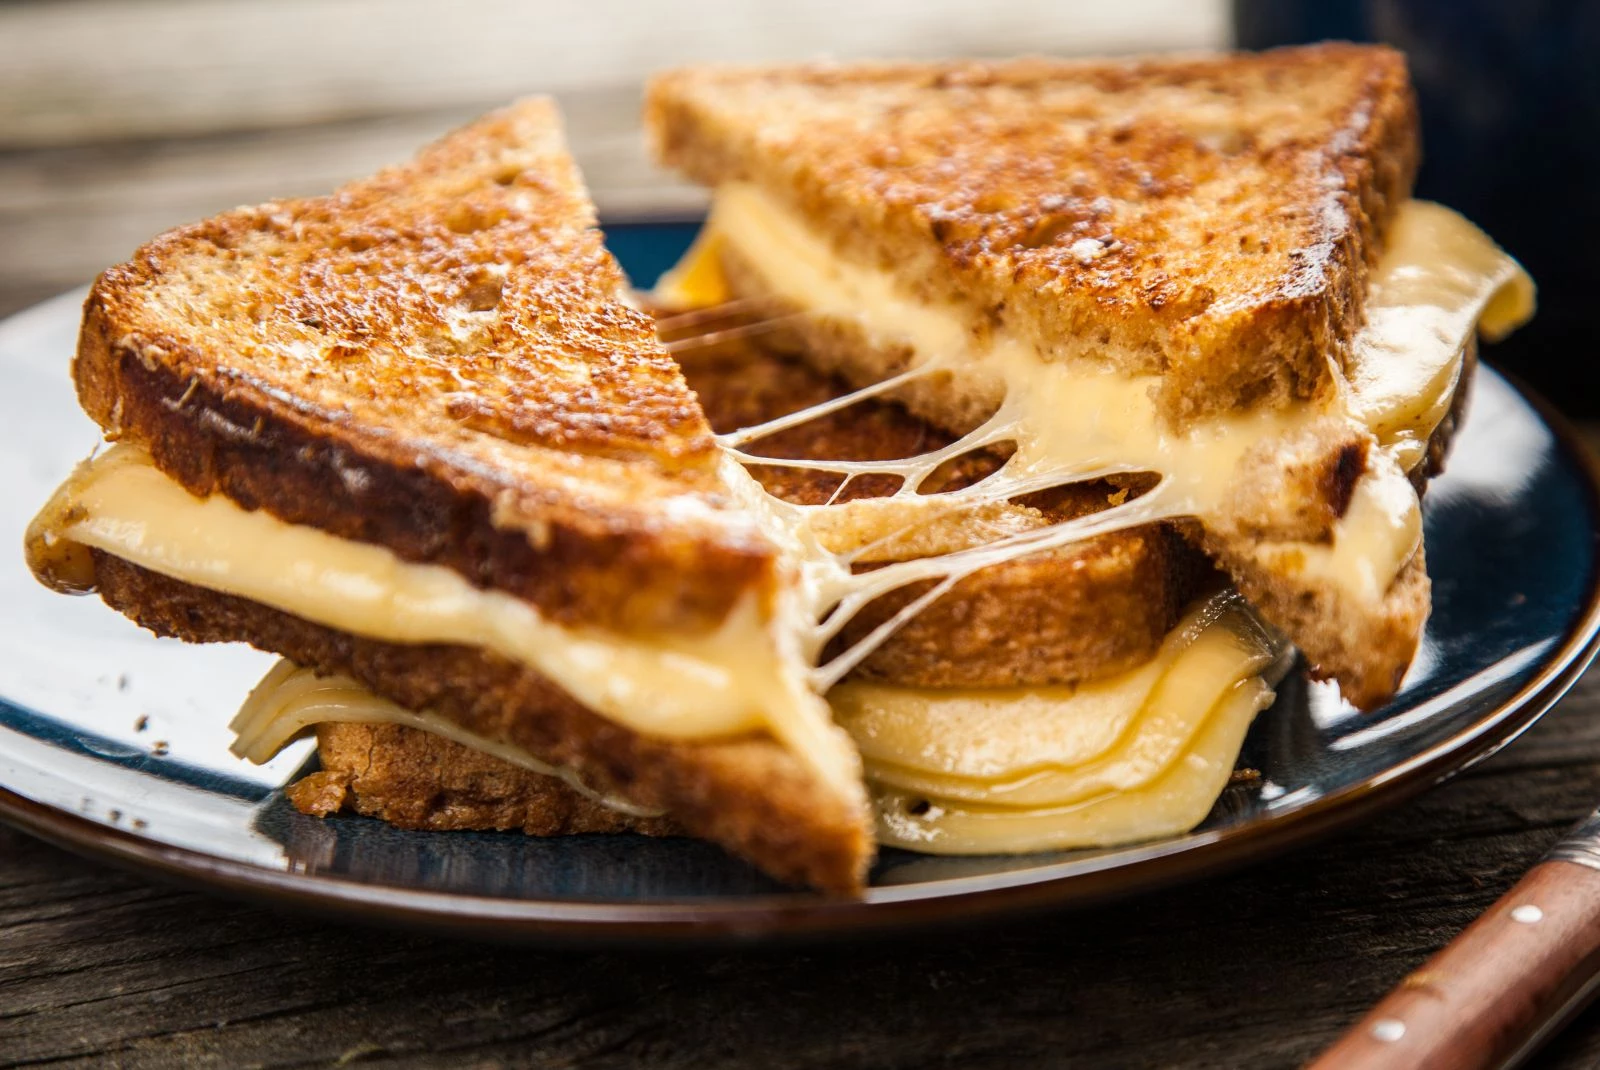 Minnesota Sandwiches Its Way to Grilled Cheese Glory-Getty Thinkstock